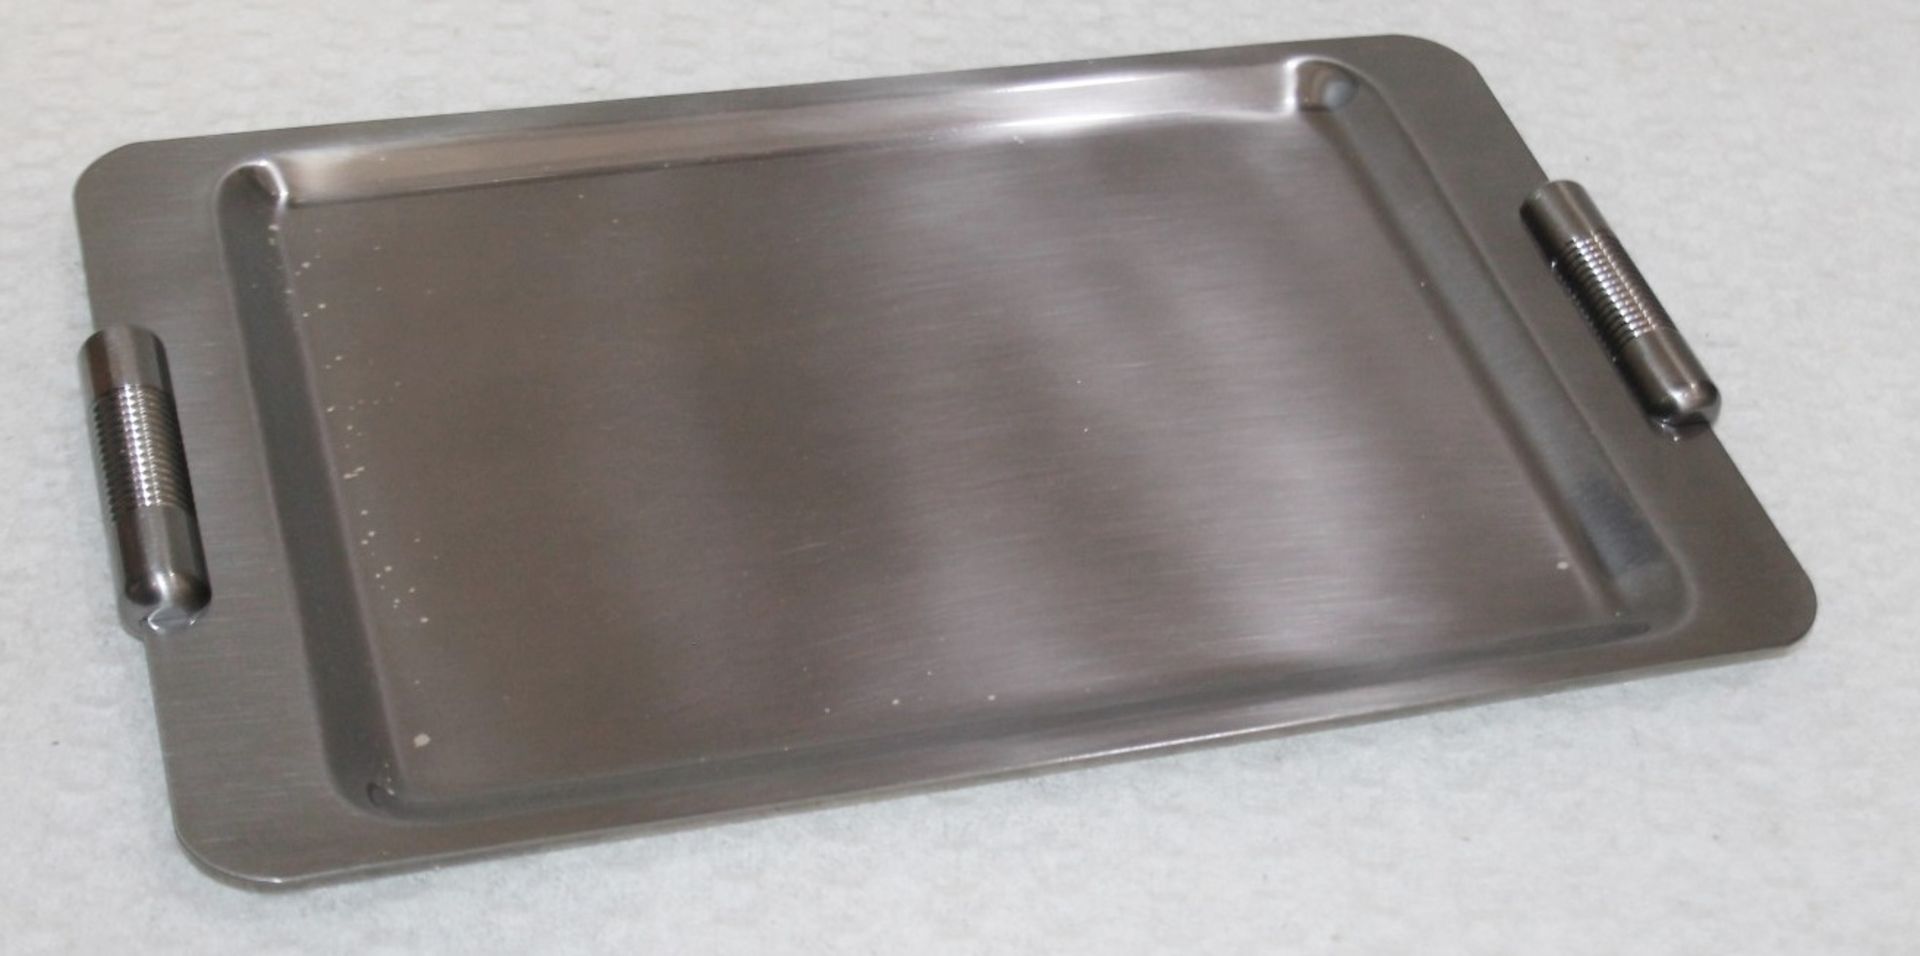 1 x ZODIAC Designer Tray With A Dark Nickel Finish - Original Price £439.00 - Ref: 5332914/HAS1171/ - Image 2 of 6